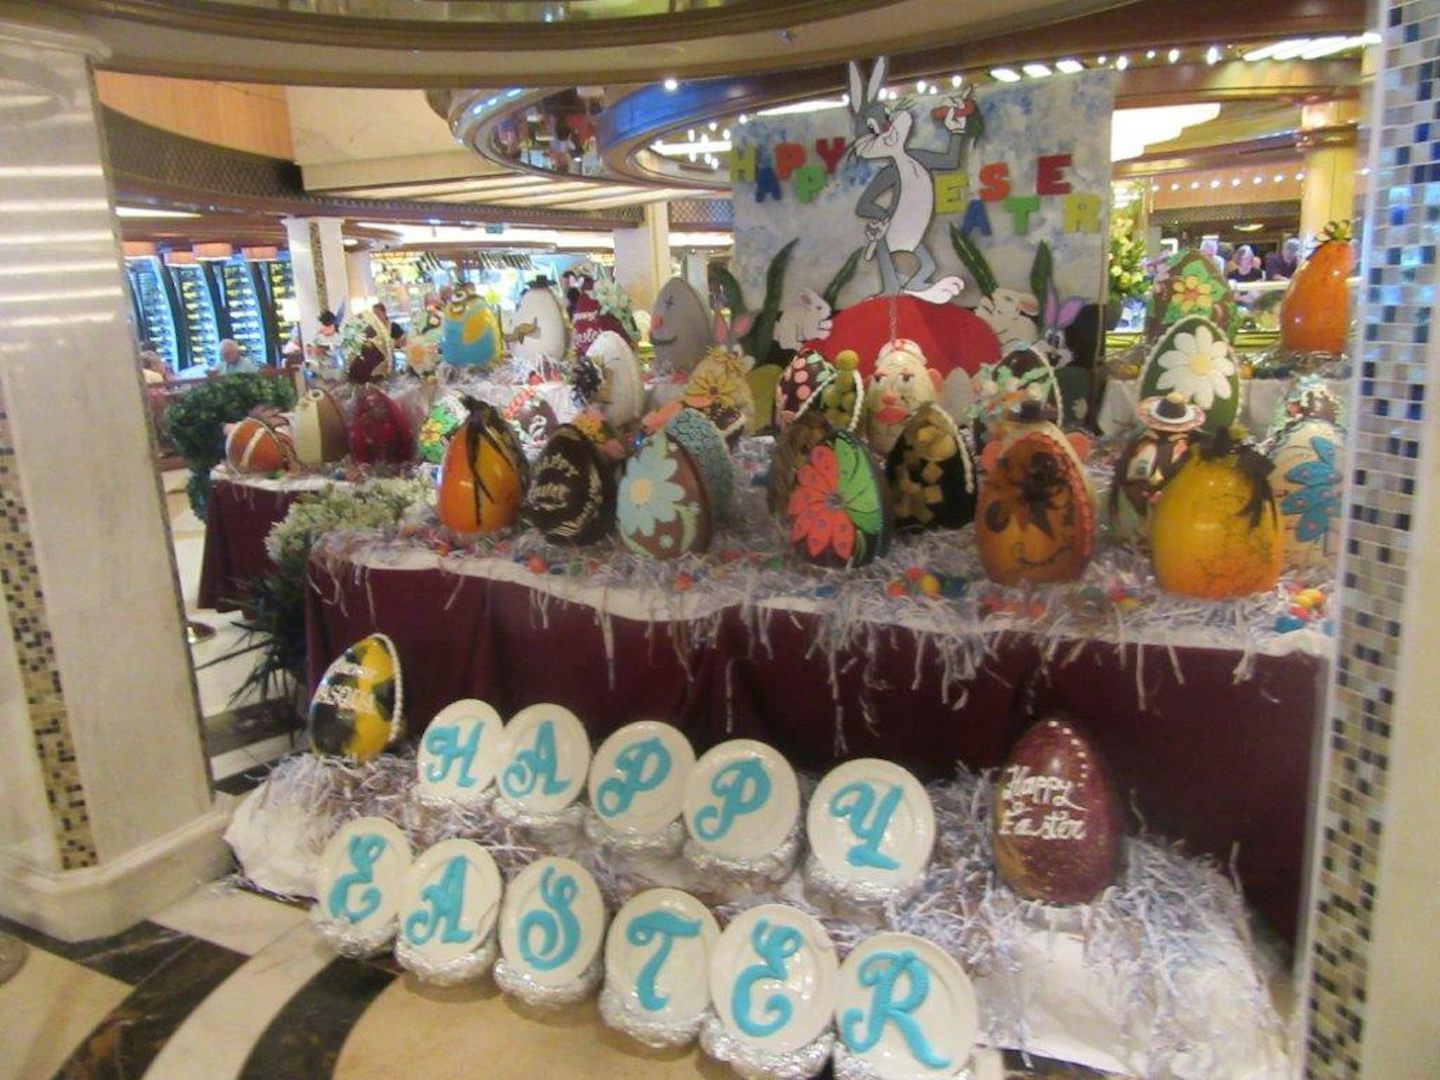 Easter egg display